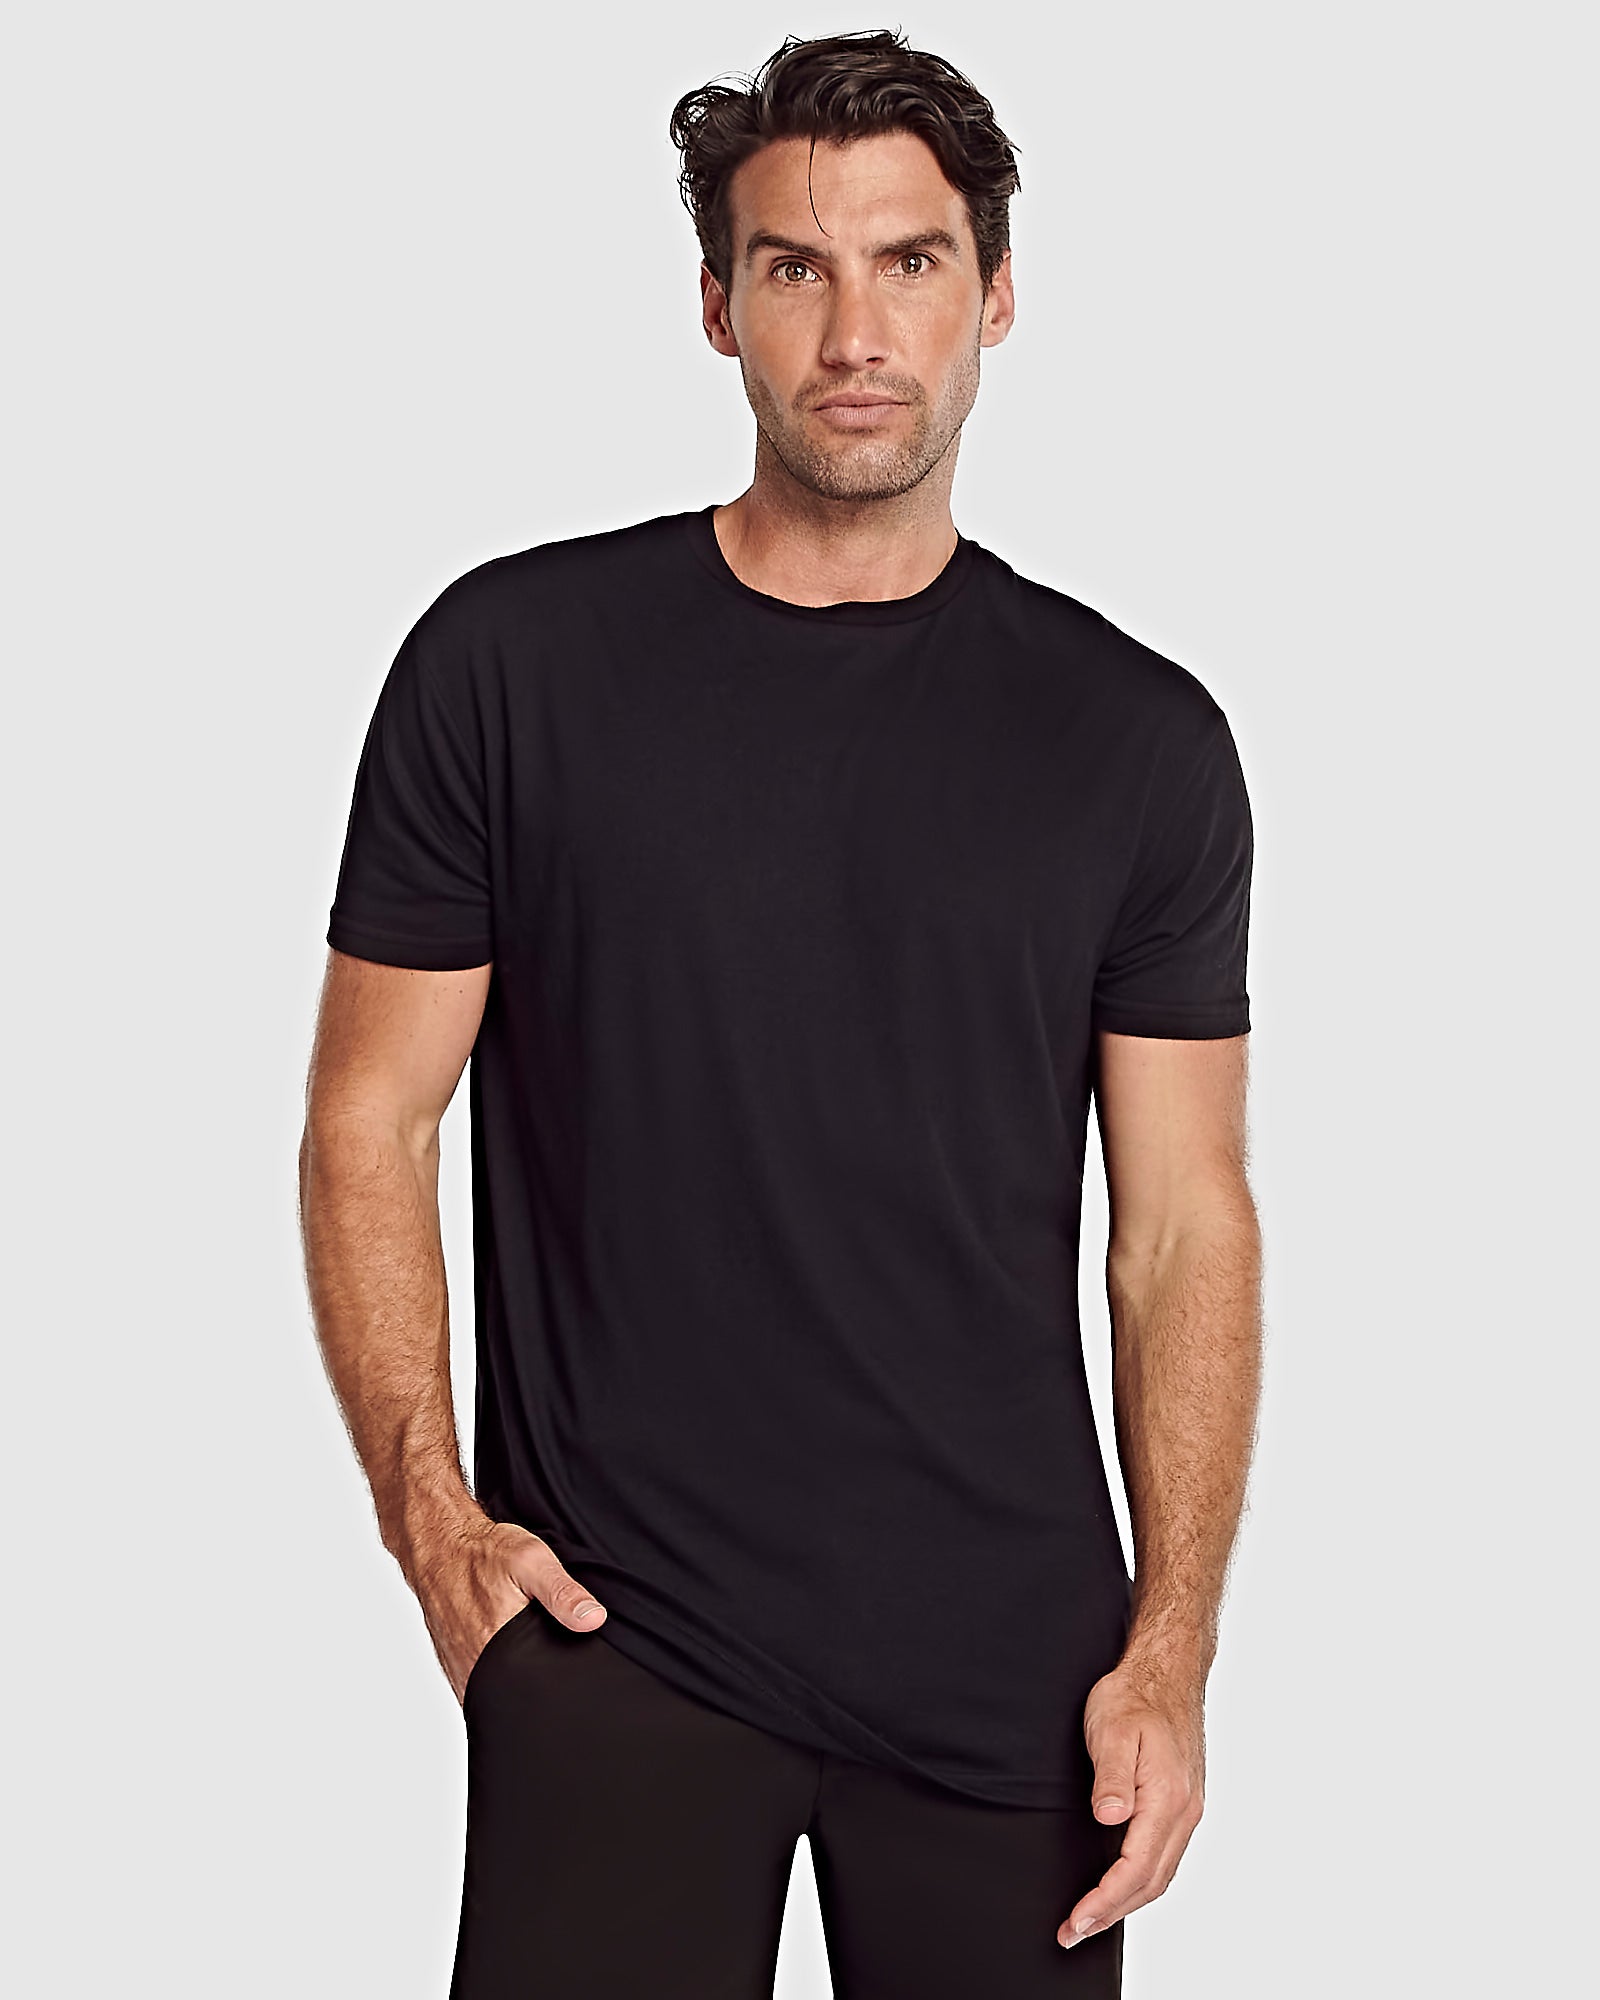 Mens Premium Black T-Shirt